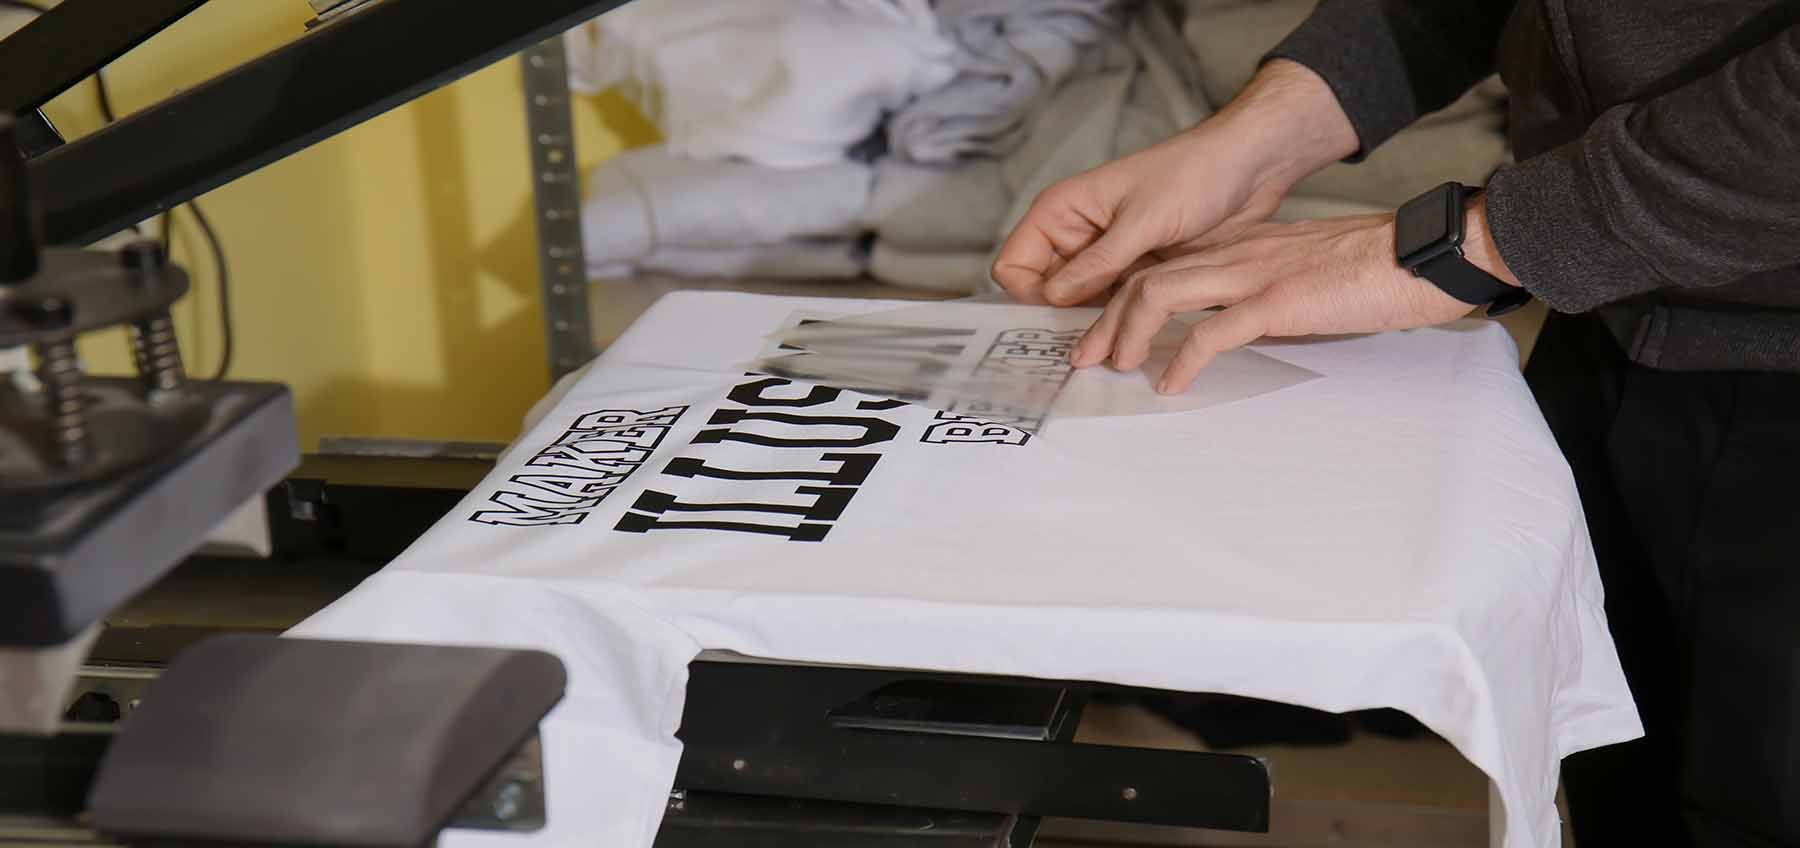 custom t shirt vinyl, custom vinyl for shirts, t shirt vinyl printer, custom vinyl t shirt printing, vinyl t shirt design